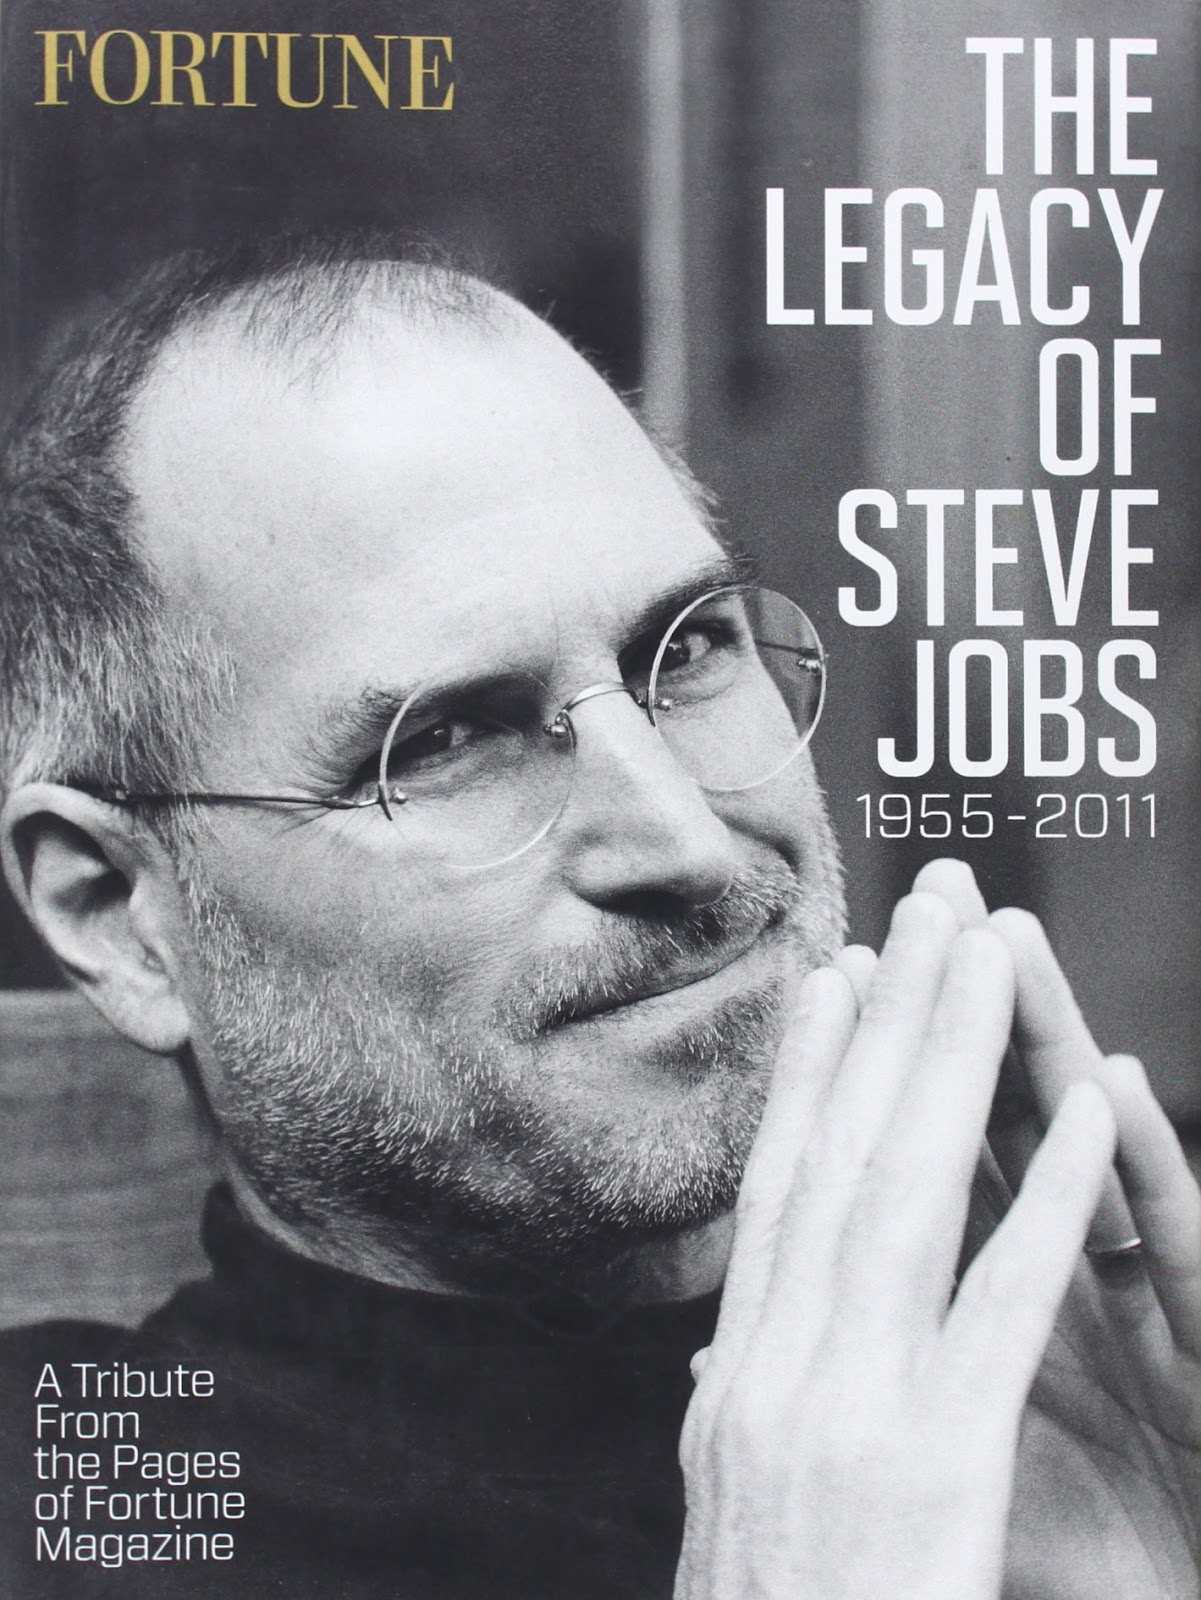 biography of steve jobs wikipedia